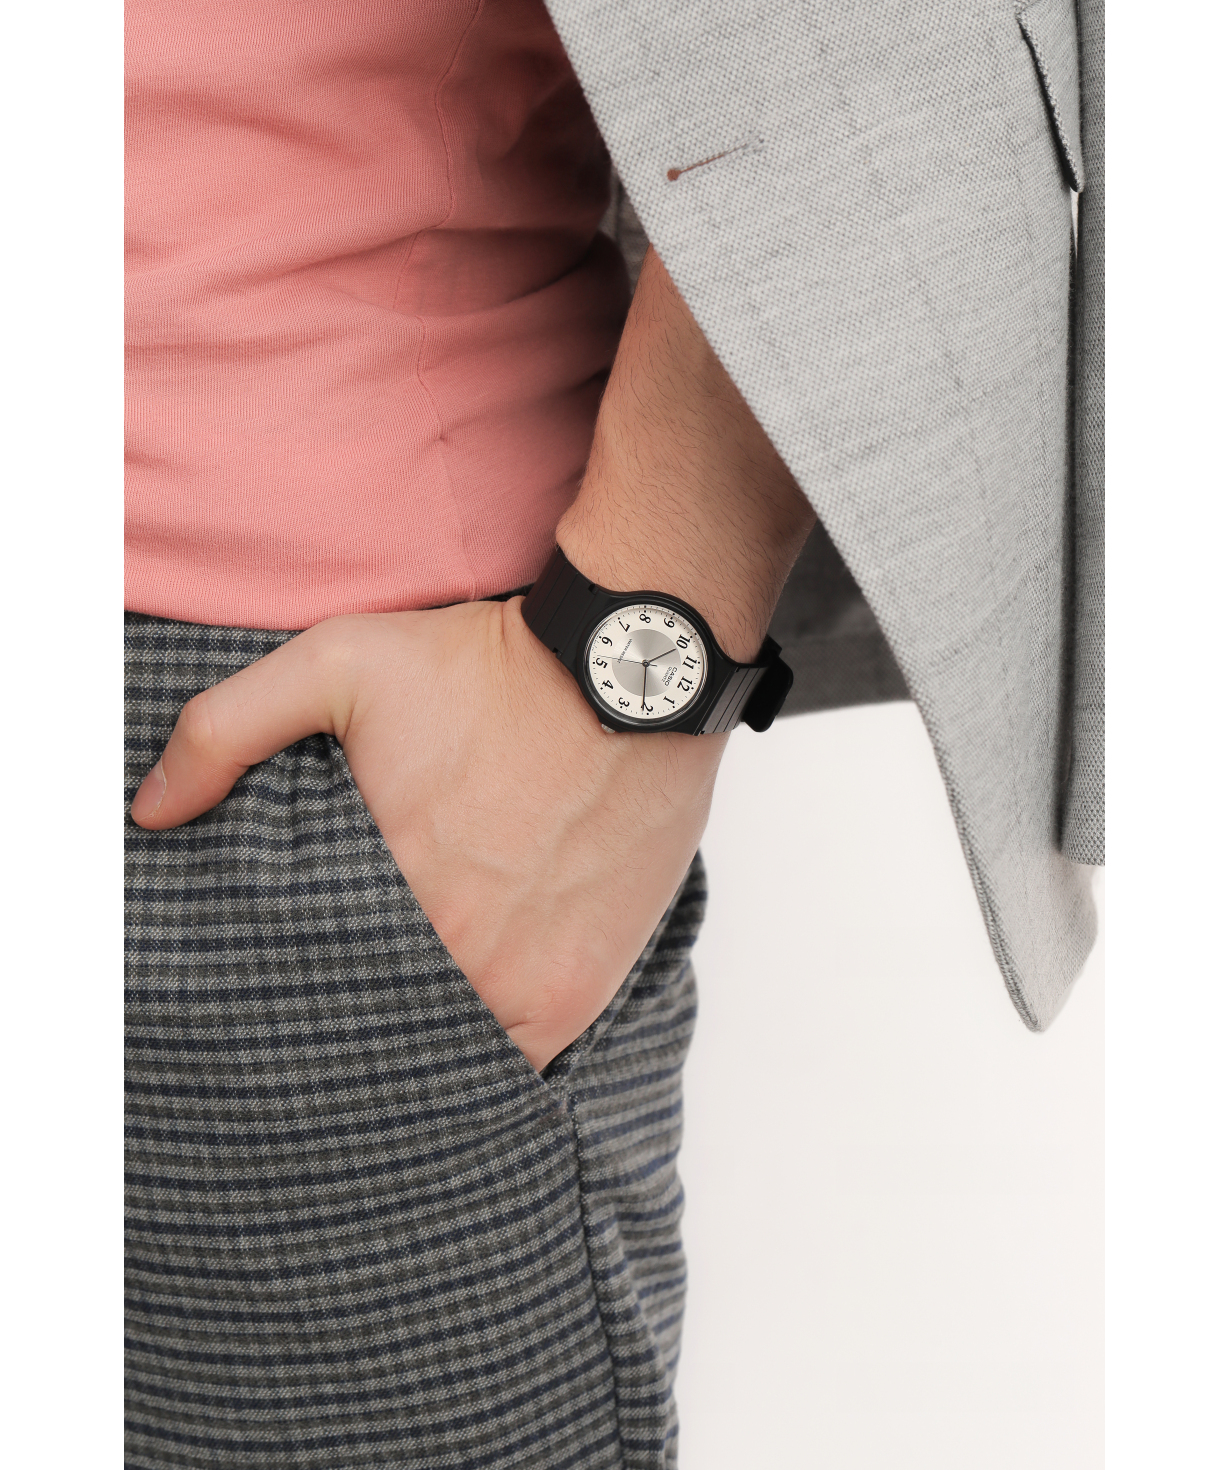 Ժամացույց  «Casio» ձեռքի   MQ-24-7B3LDF